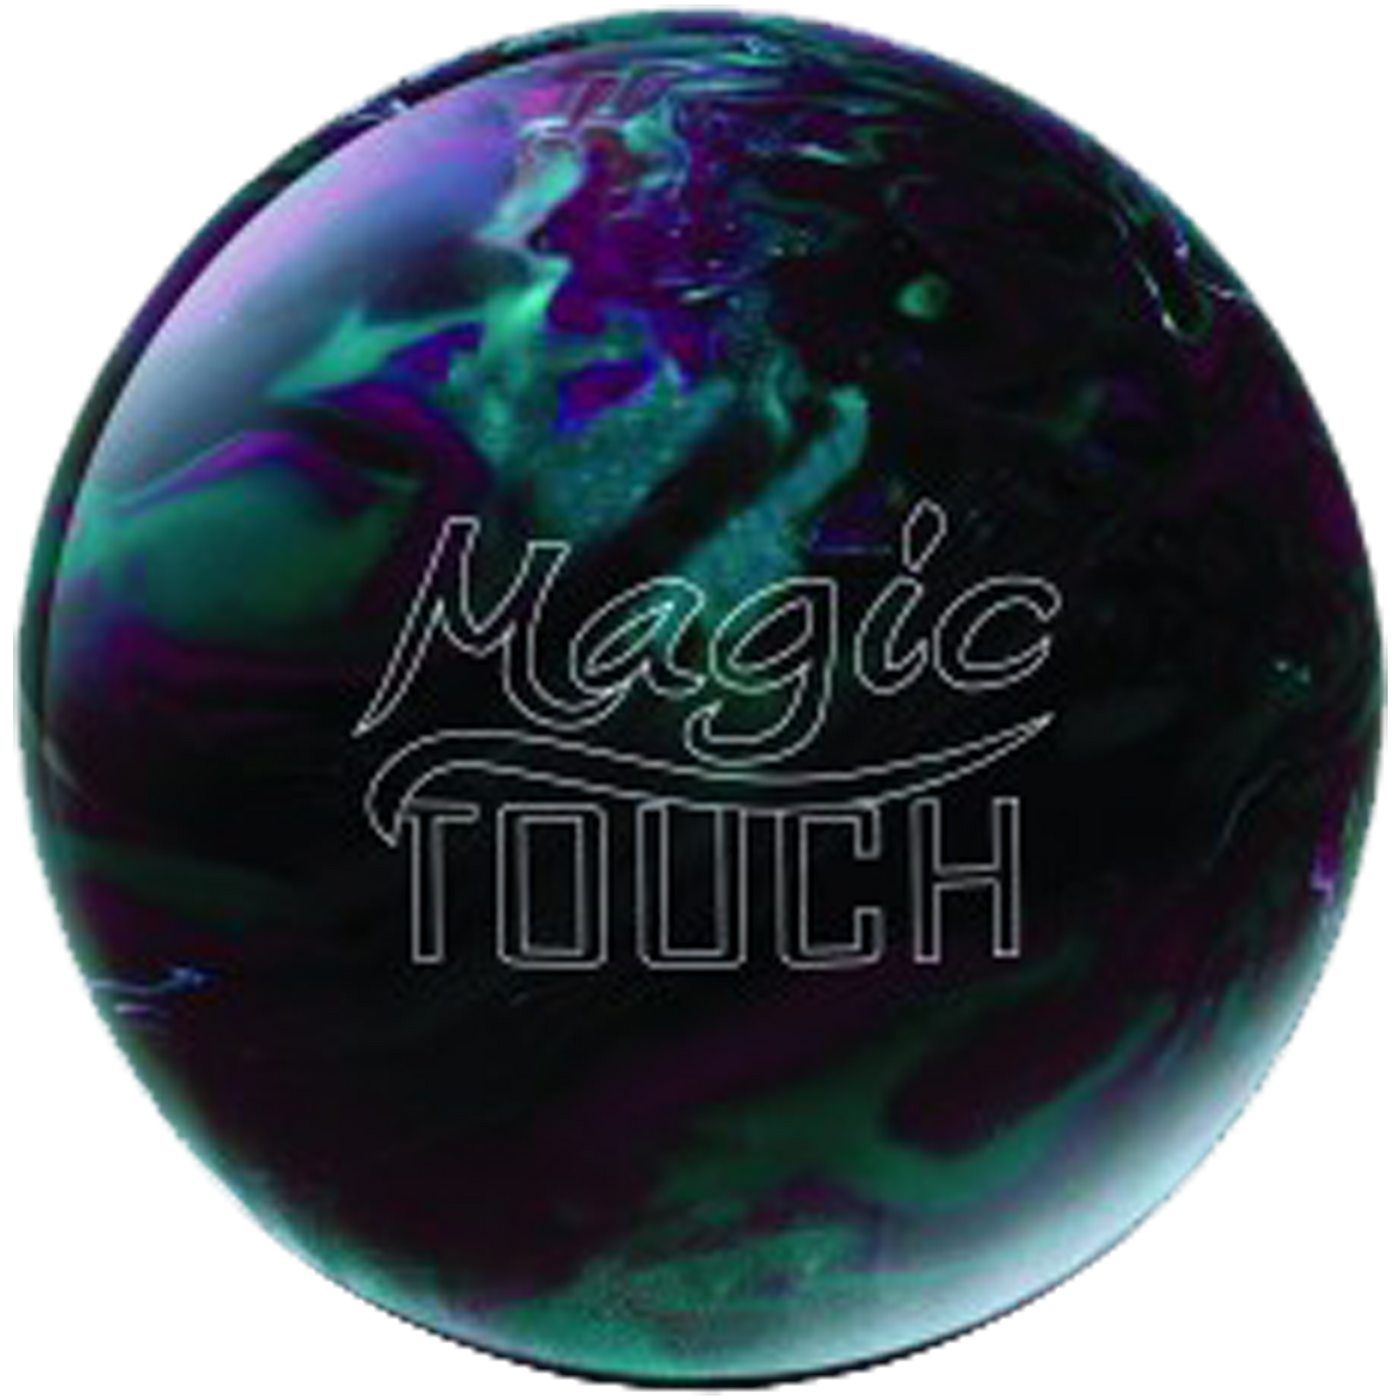 Magic Touch Bowling Ball